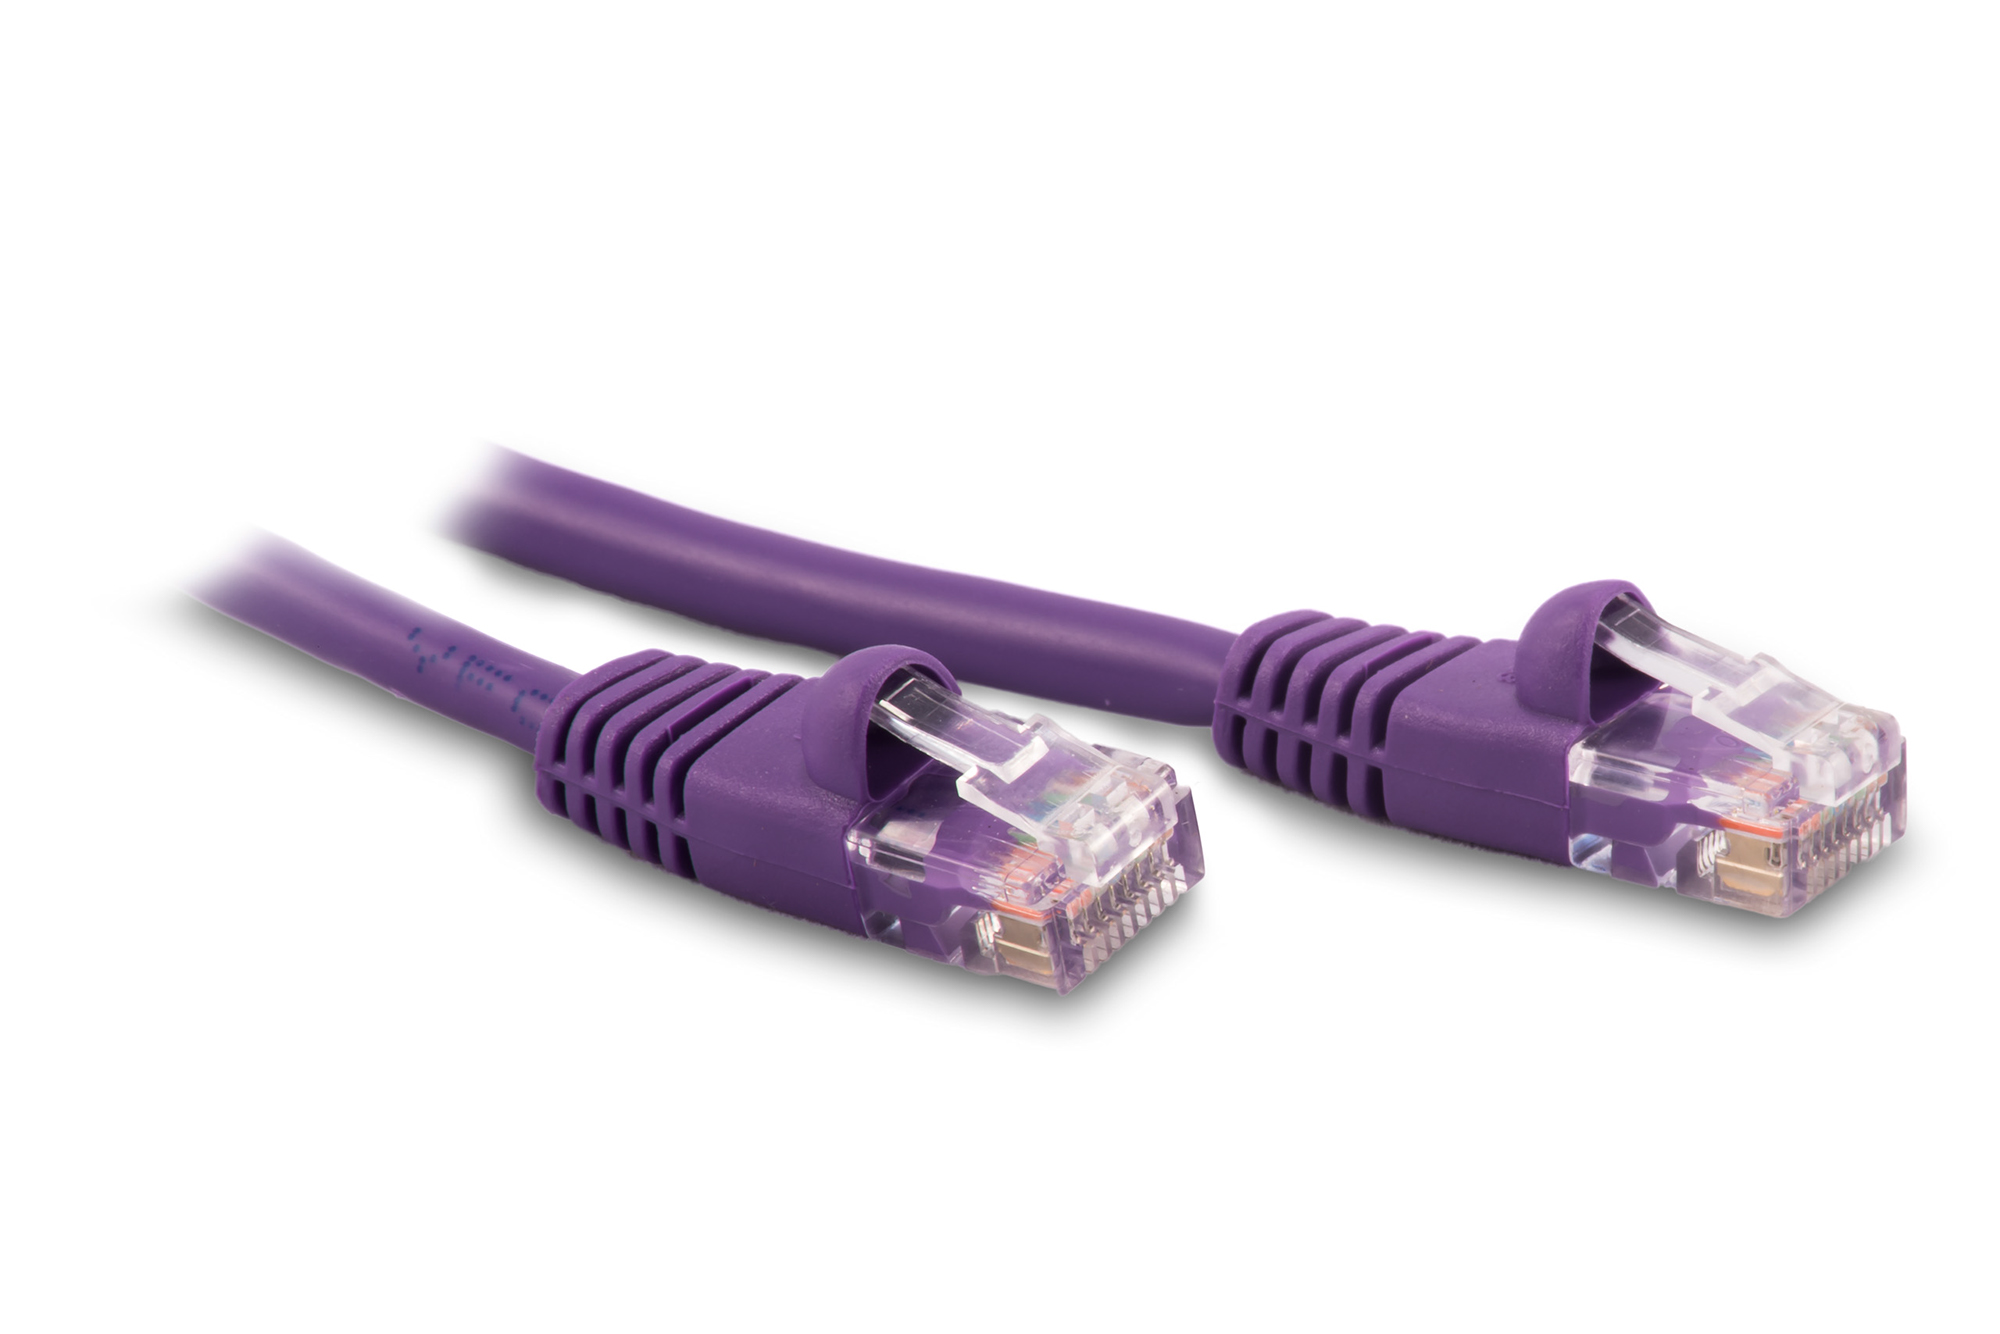 5ft Cat6 Ethernet Patch Cable - Violet Color - Snagless Boot, Stranded, RJ45, 550Mhz, 24AWG